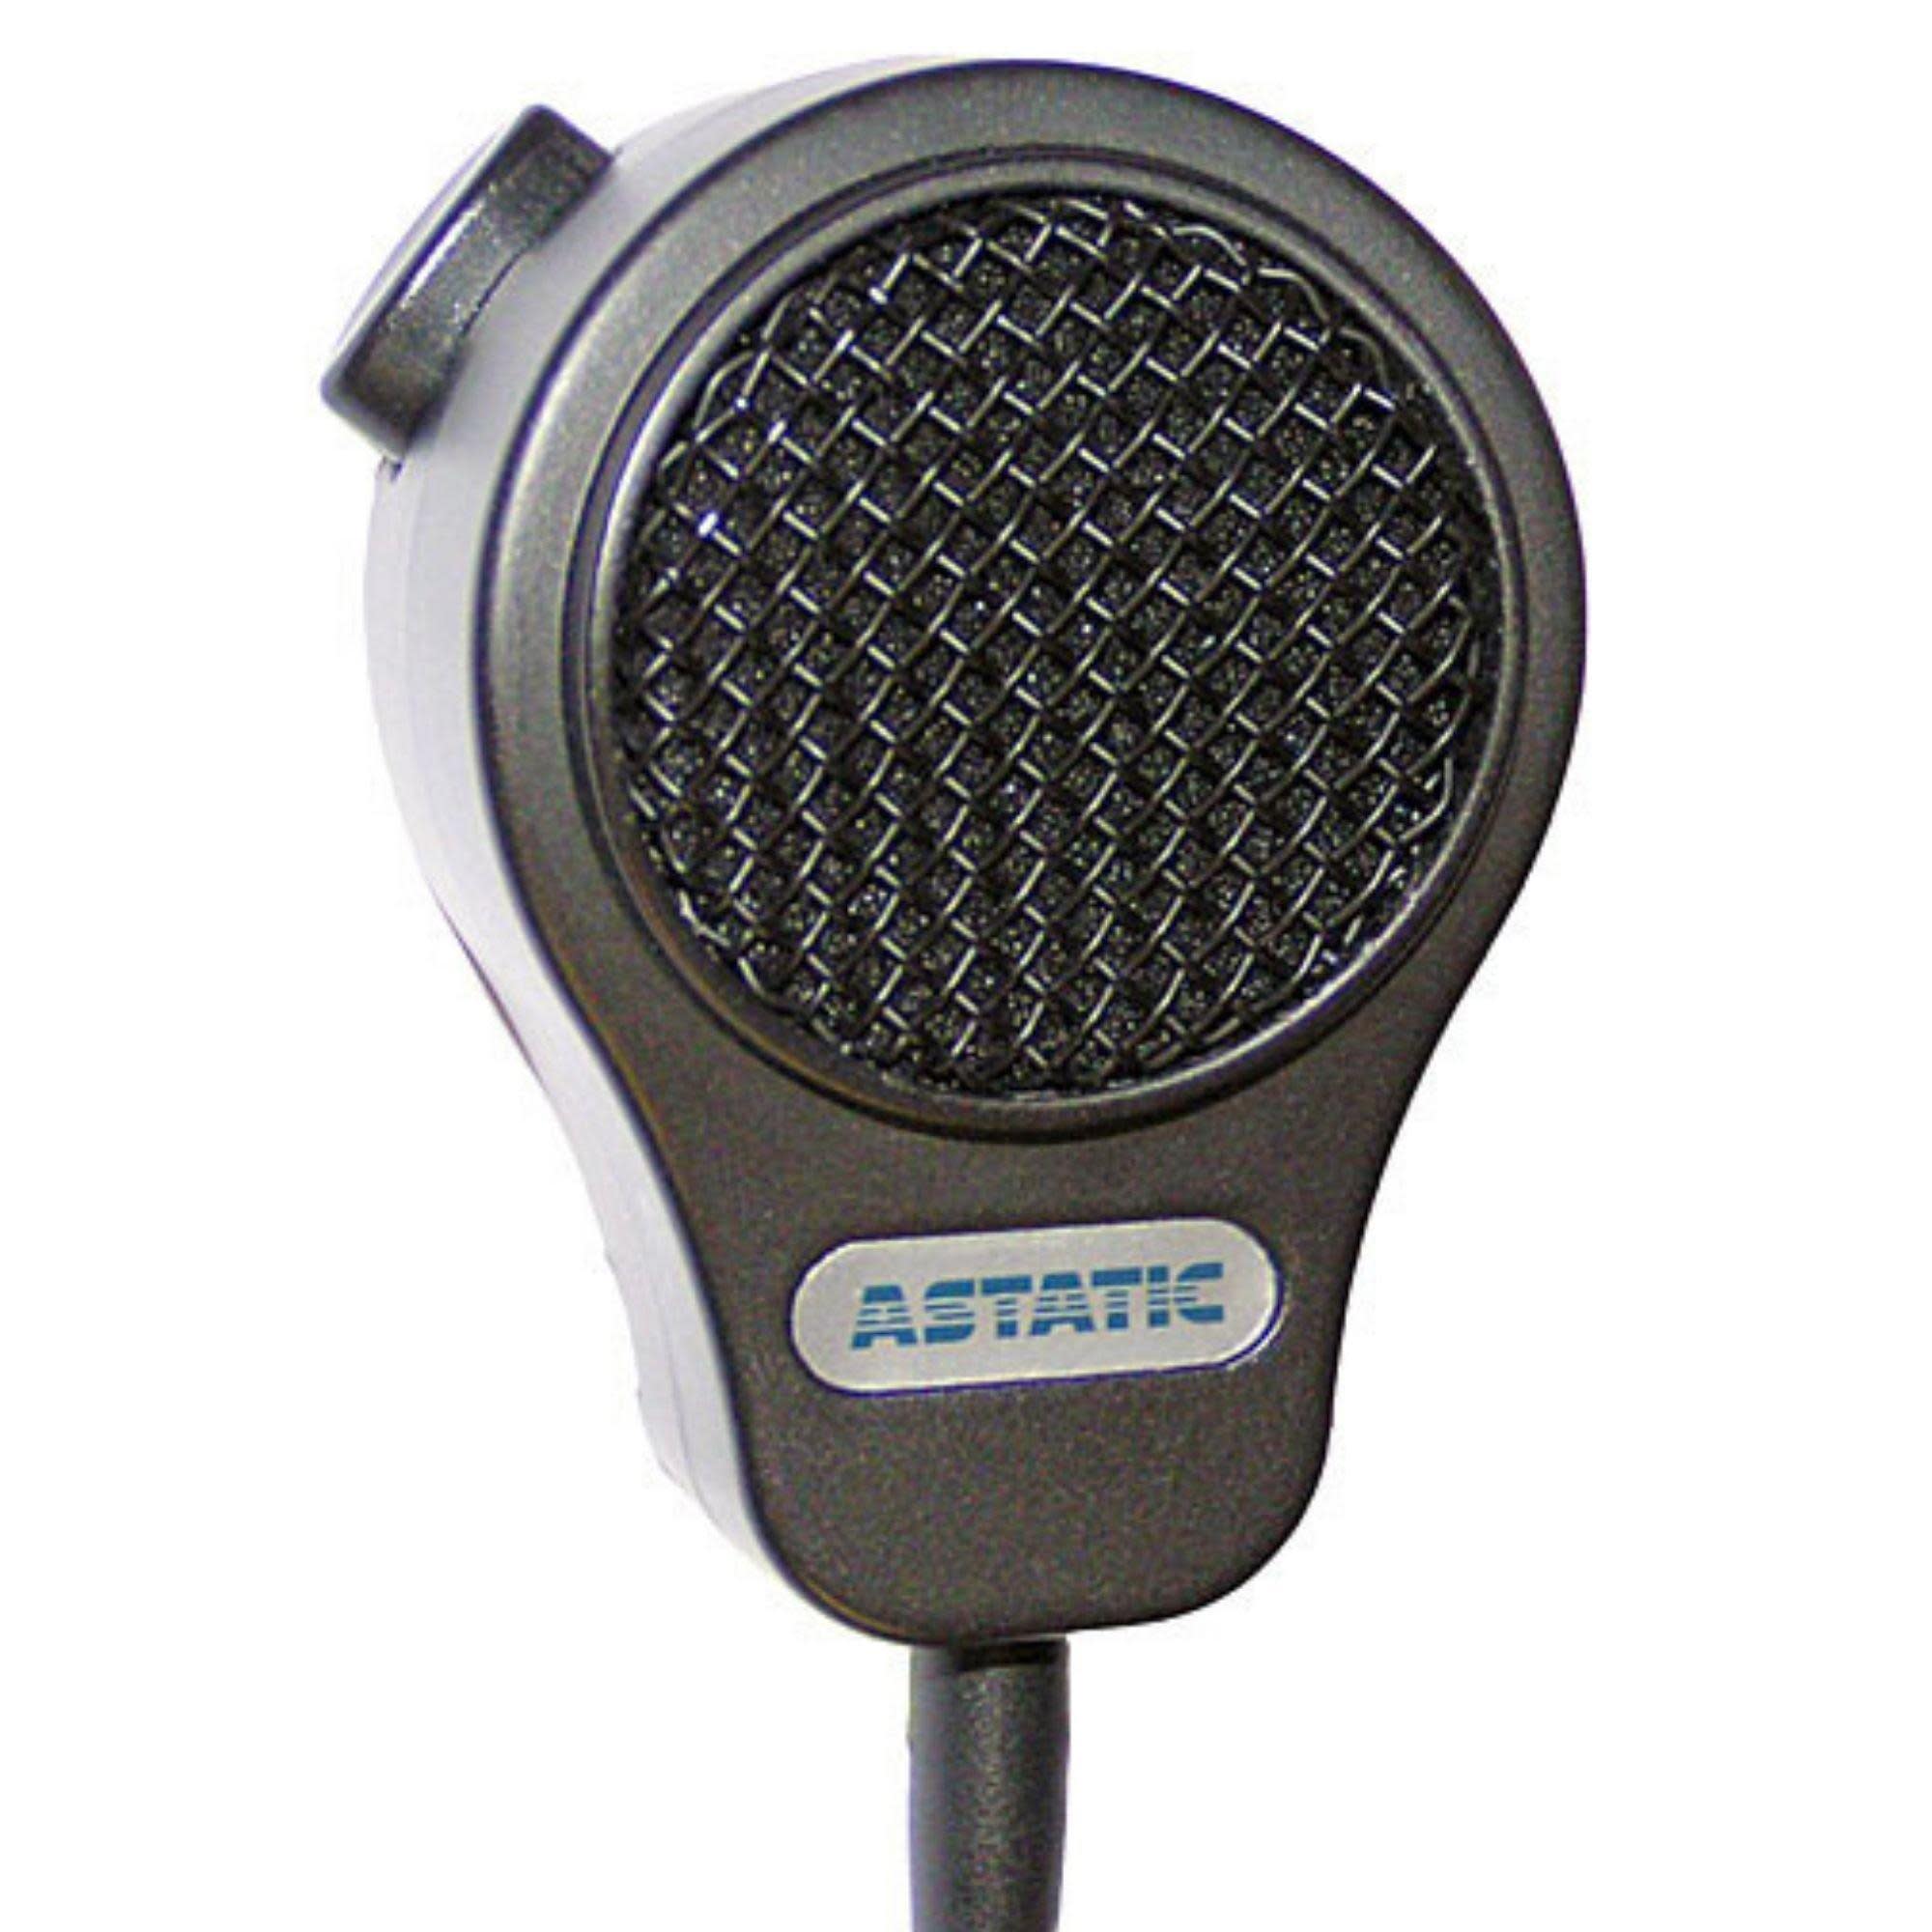 Astatic, Astatic 651 Small Format Dynamic Palmheld Microphone